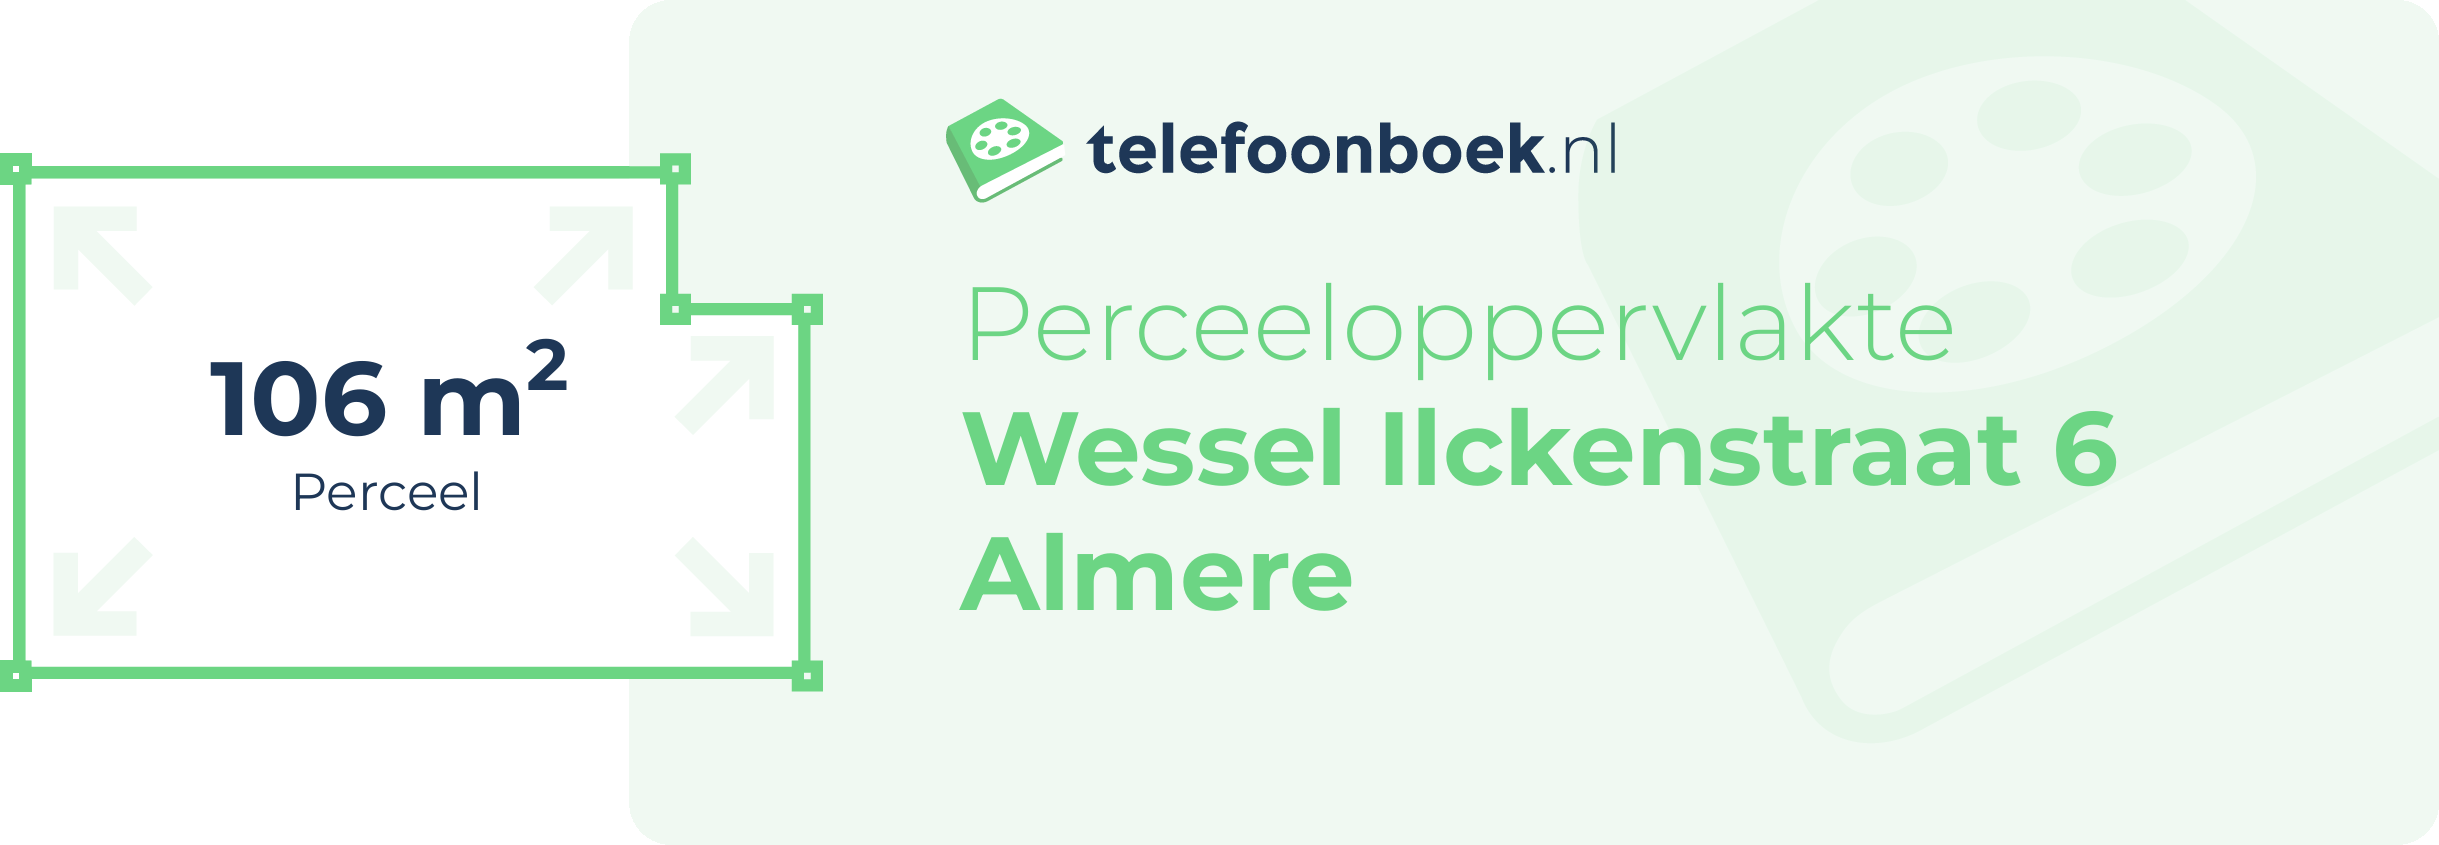 Perceeloppervlakte Wessel Ilckenstraat 6 Almere